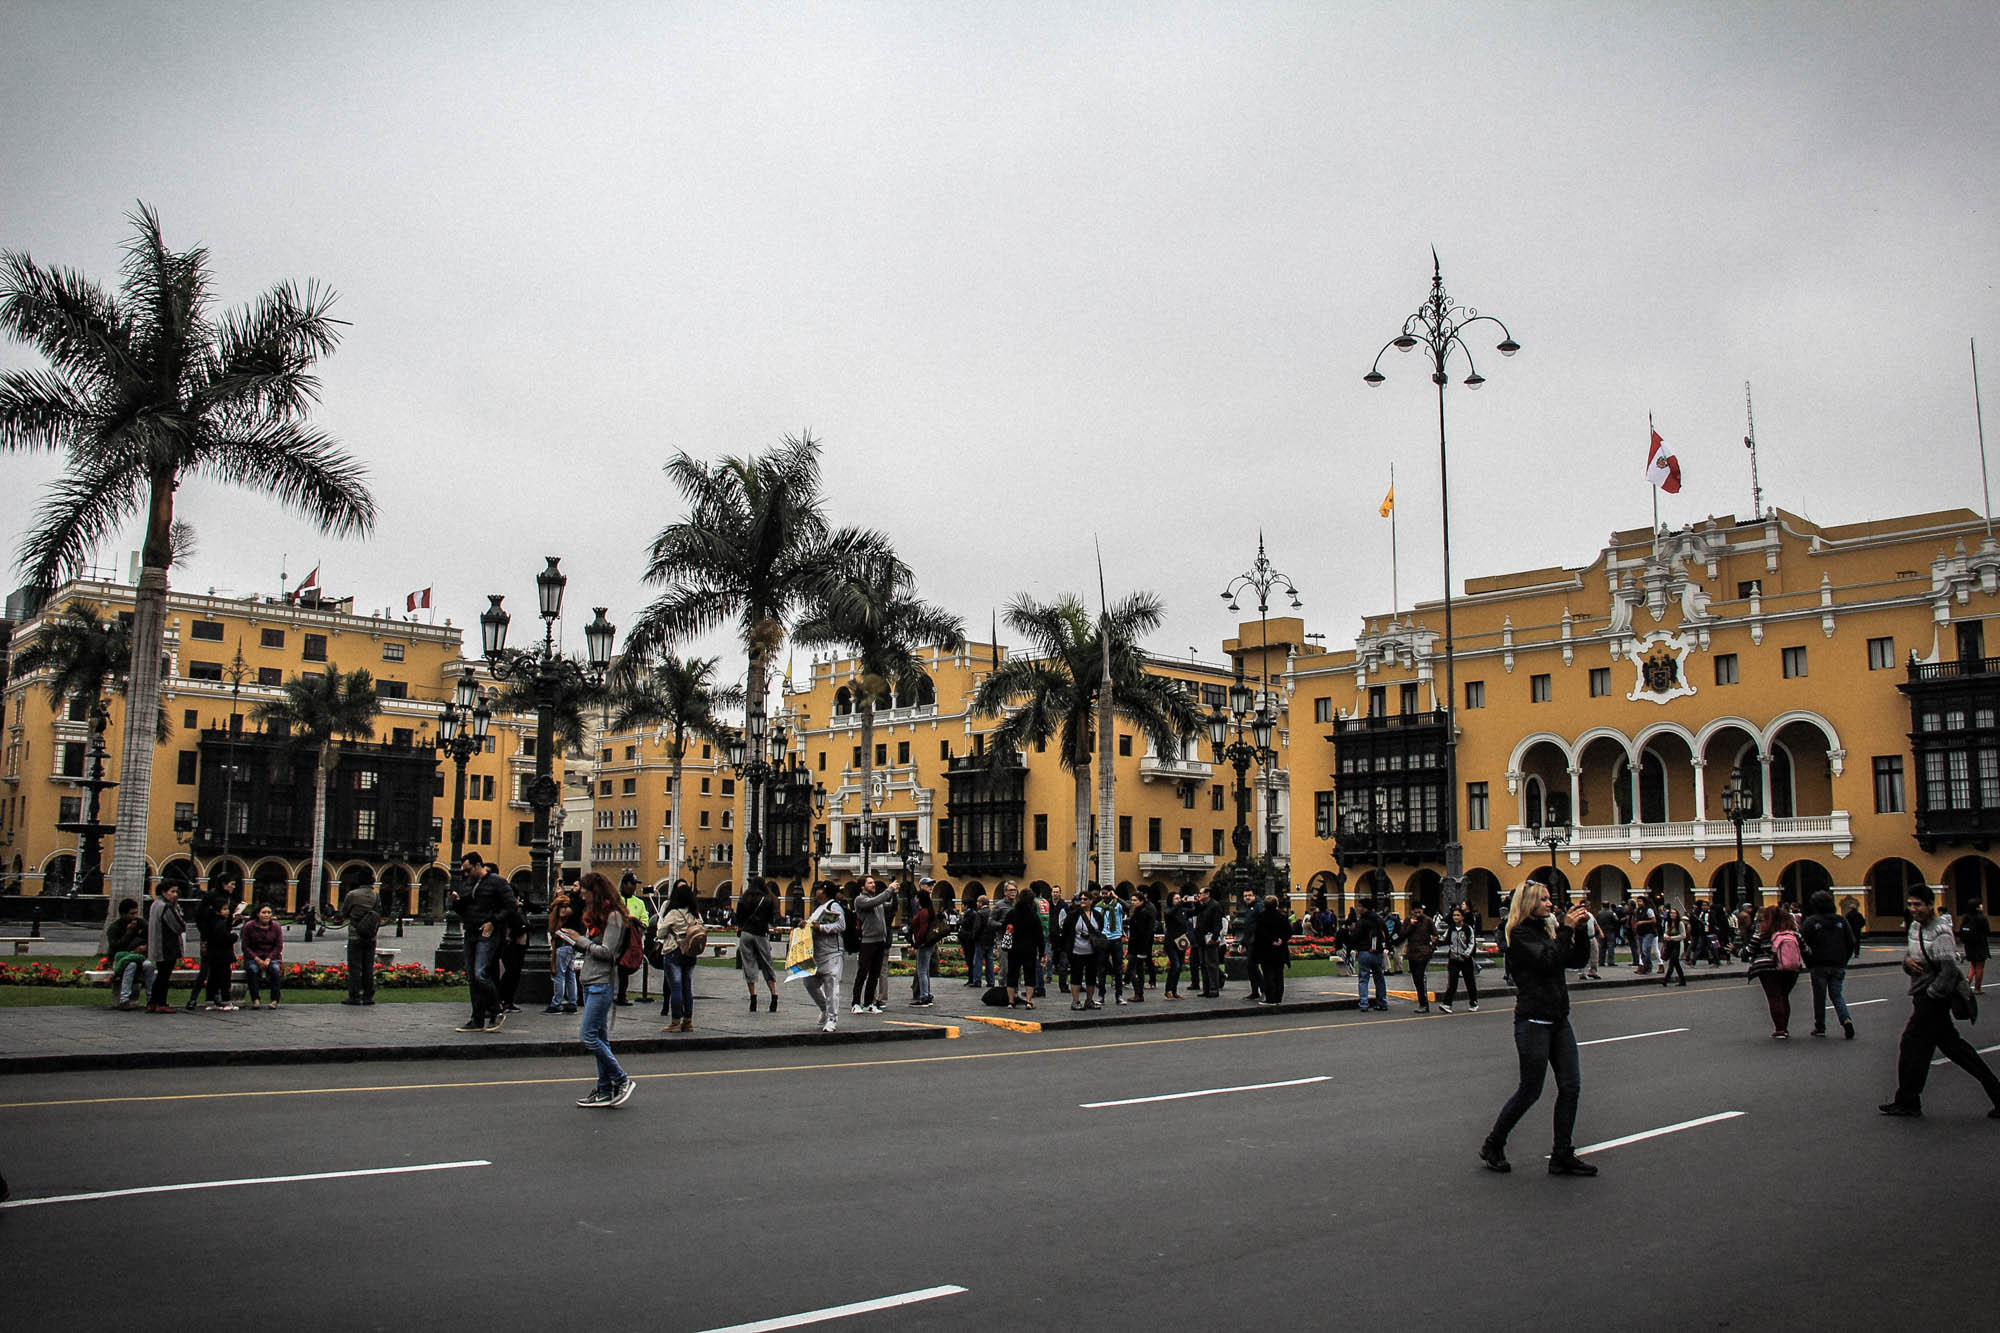 Plaza de Armas (Plaza Mayor)